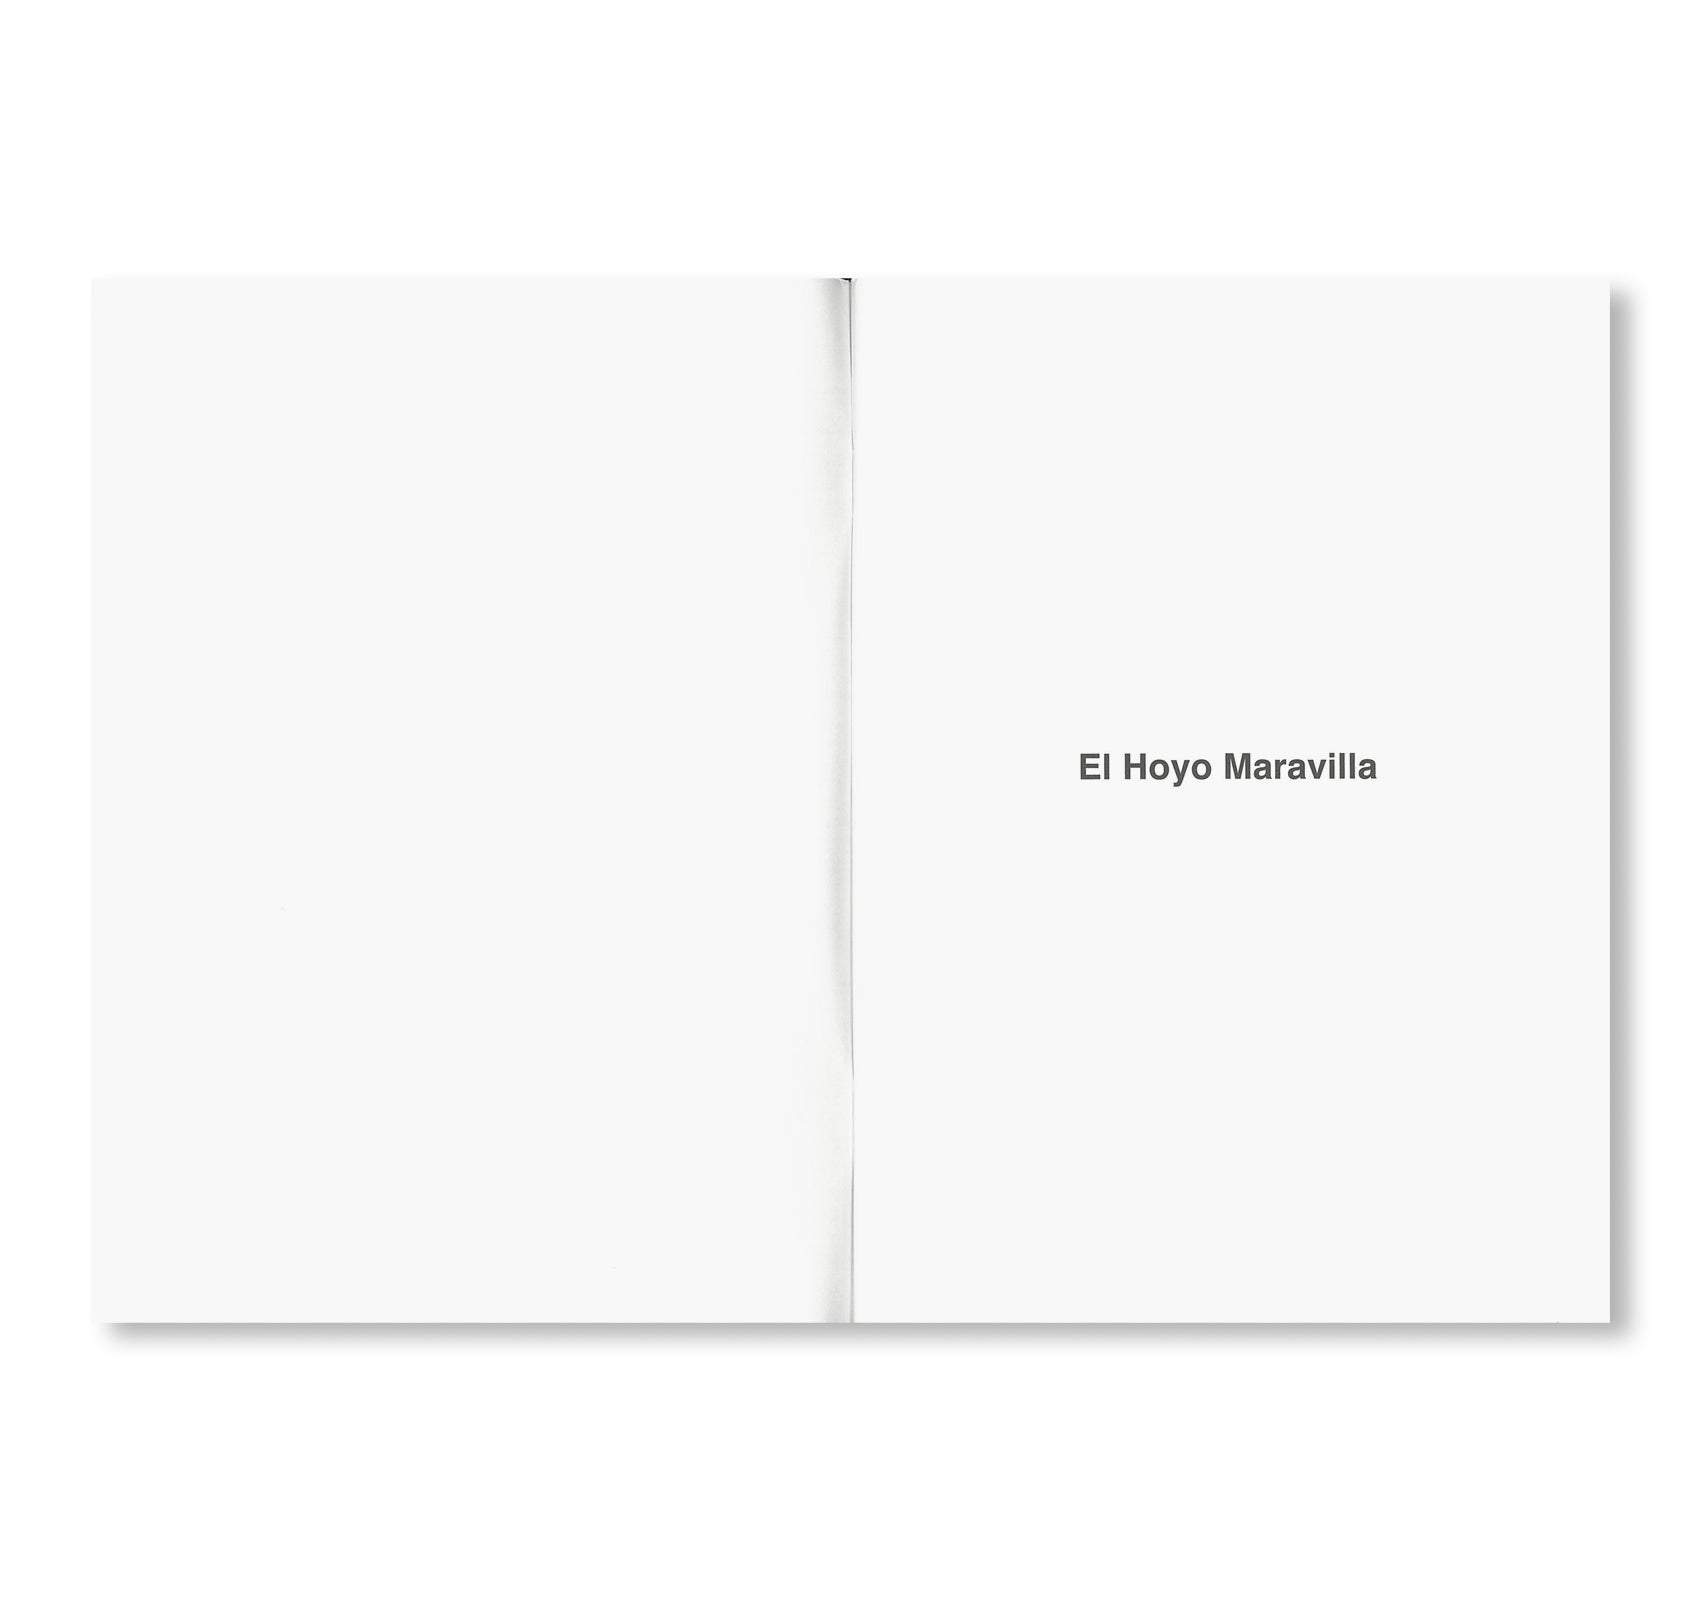 EL HOYO MARAVILLA by Janette Beckman